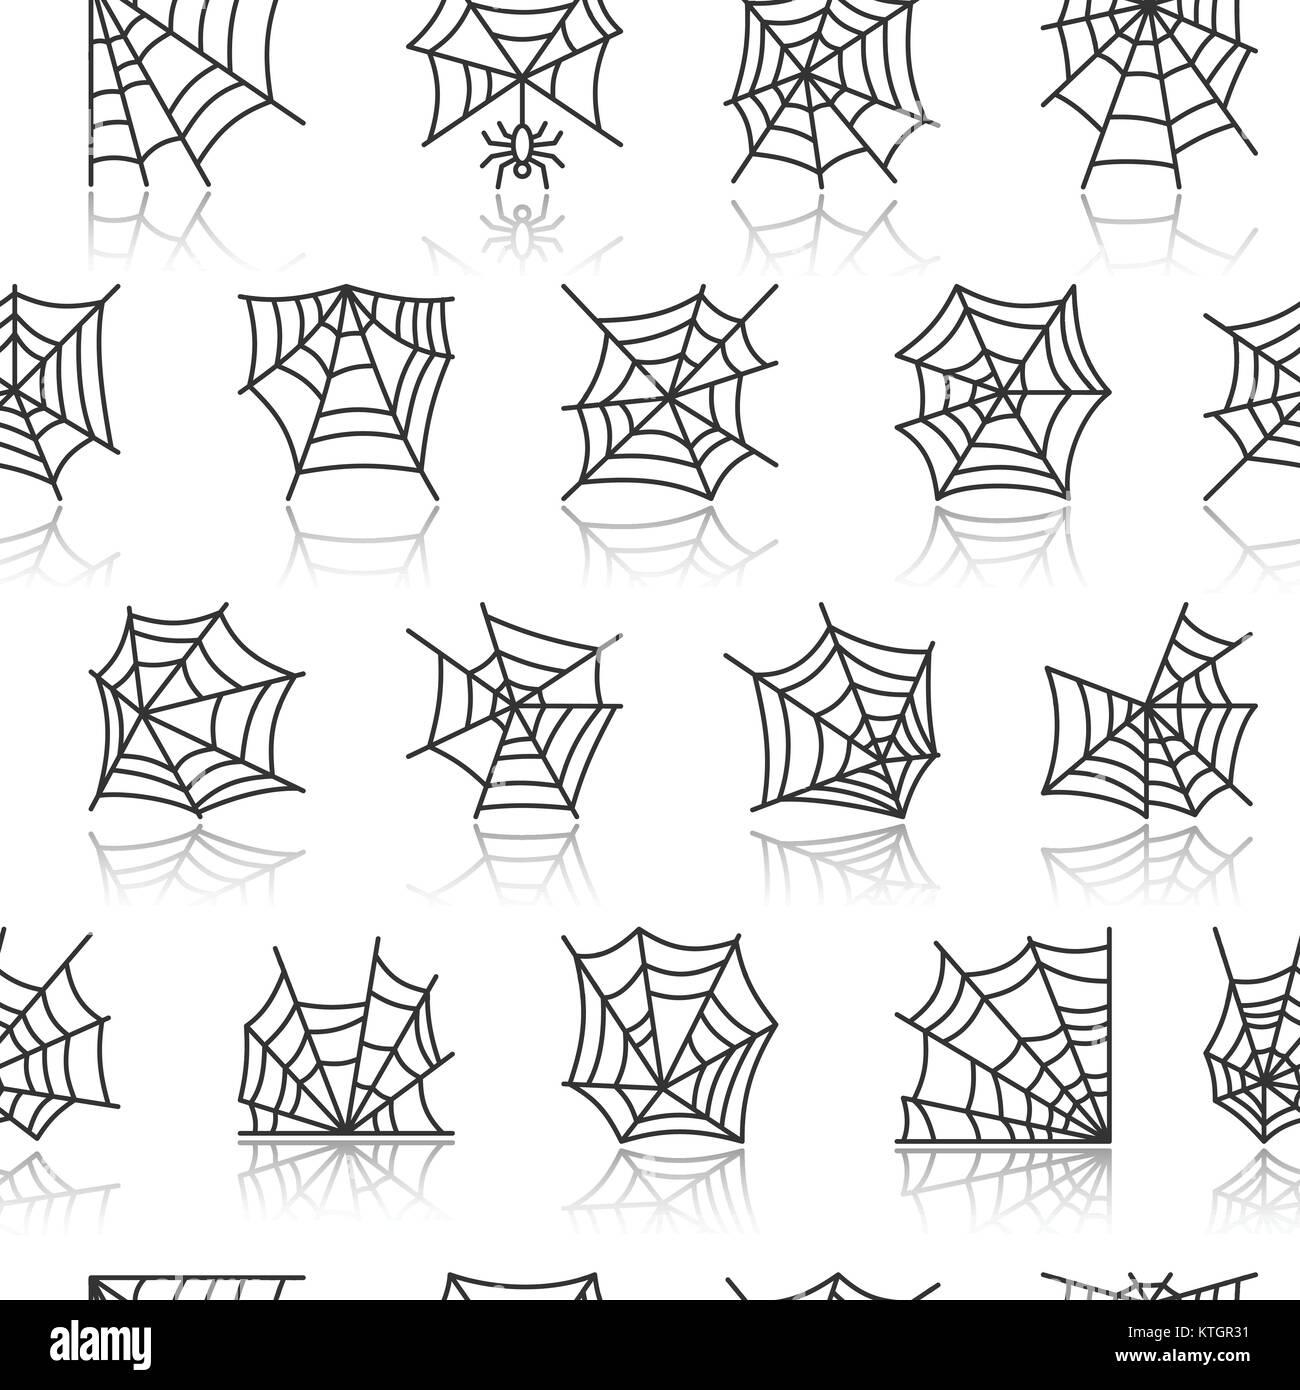 Spider web seamless pattern. Cobweb vector illustration. Black on white monochrome background. Spiderweb season celebration symbol. Print, wrapping, p Stock Vector